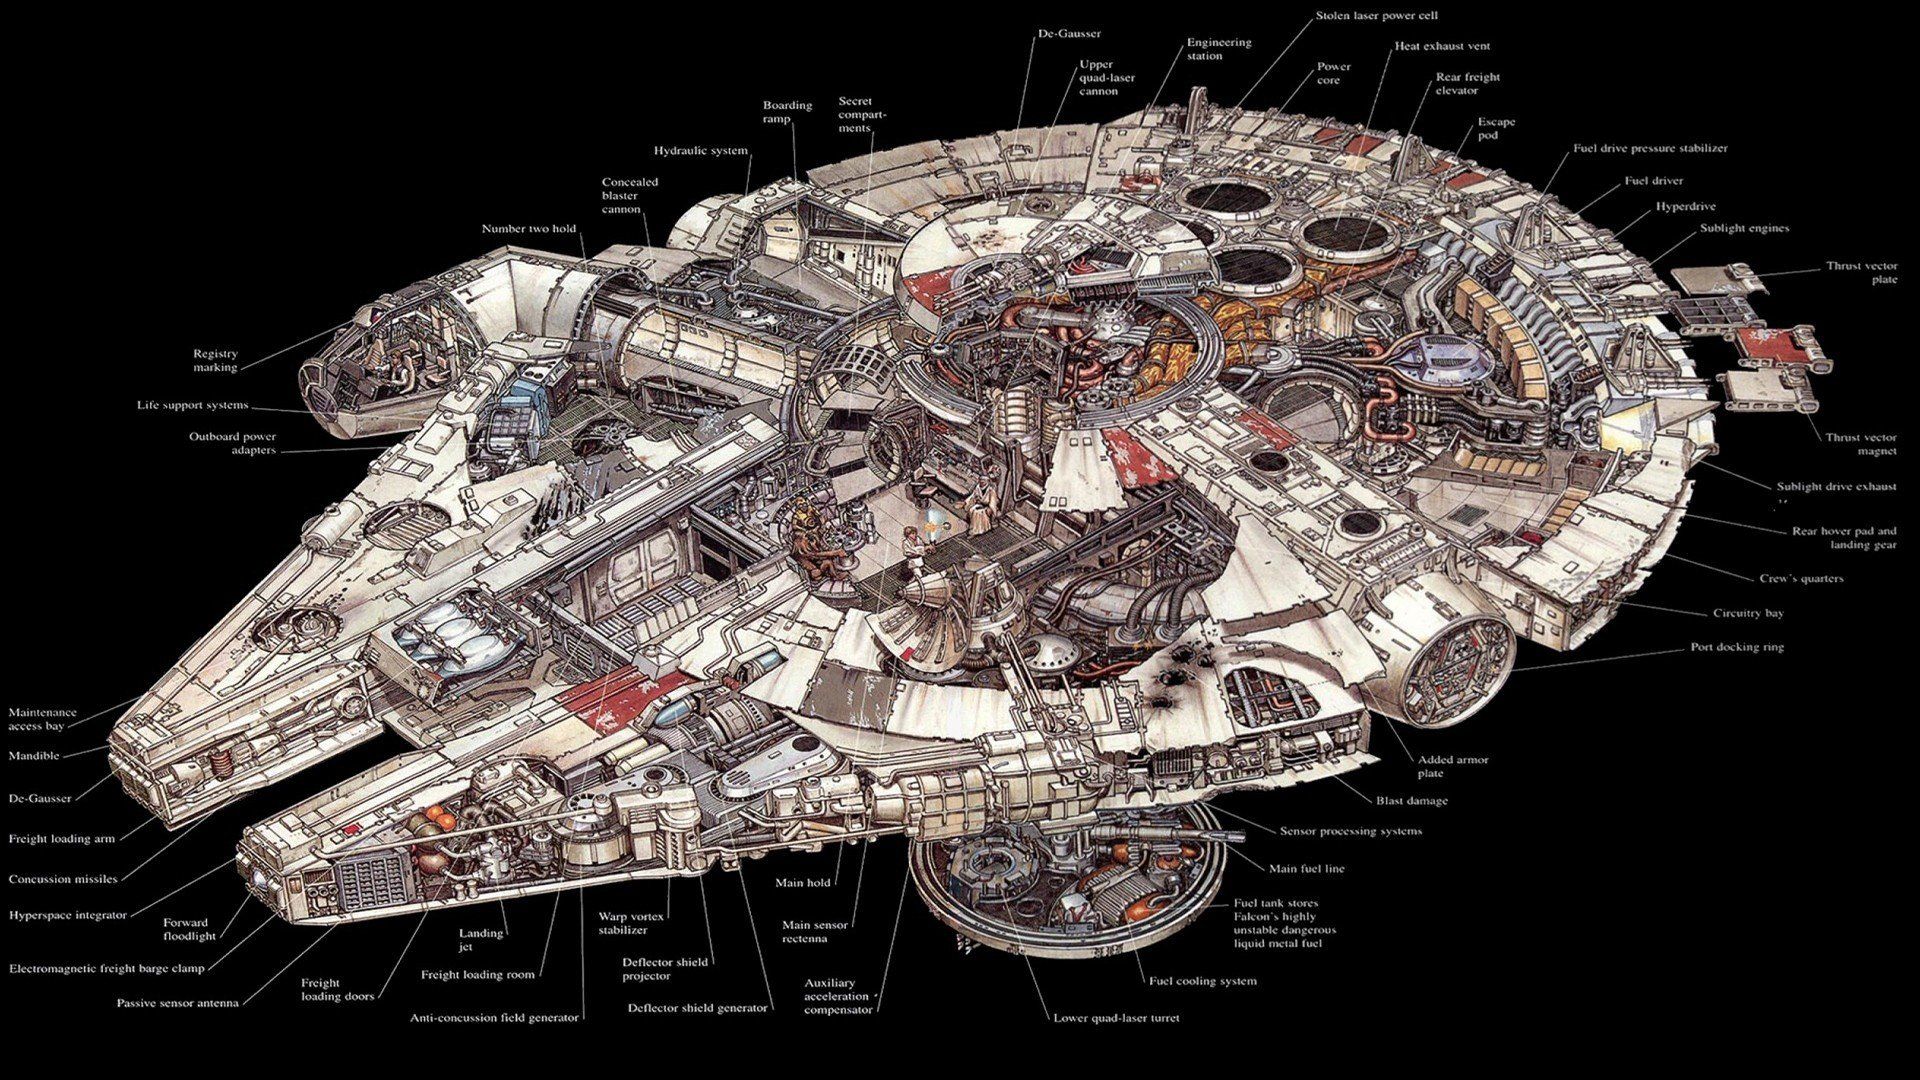 Star Wars Millennium Falcon schematic science fiction wallpaper